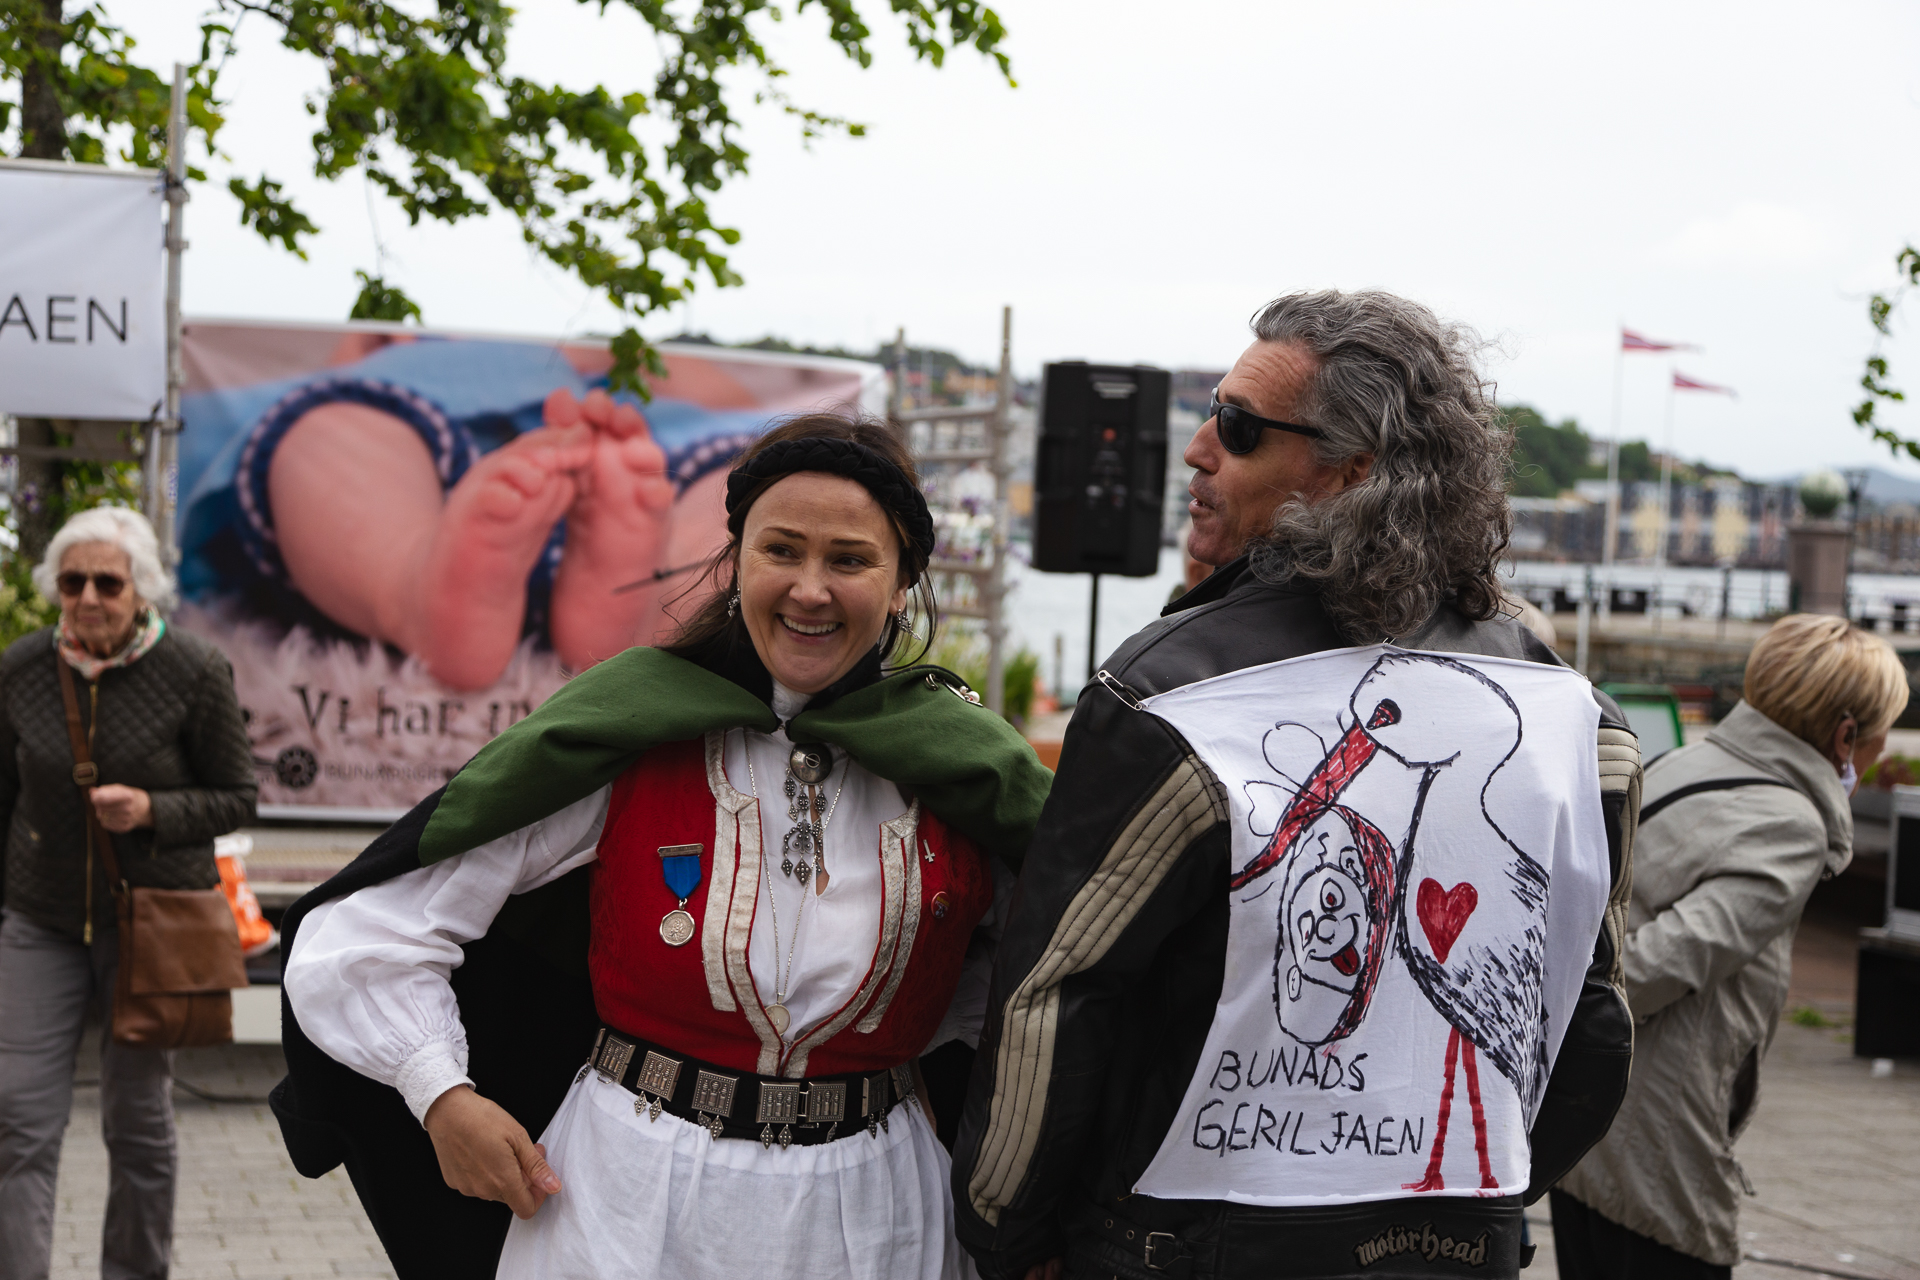 Anja Solvik, leder i Bunadsgeriljaen, poserer sammen med kronikkforfatter Vidar Holm i Bunadsgeriljaens aksjon og markering 19. juni 2021 i Kristiansund. Foto: Steinar Melby / KSU.NO